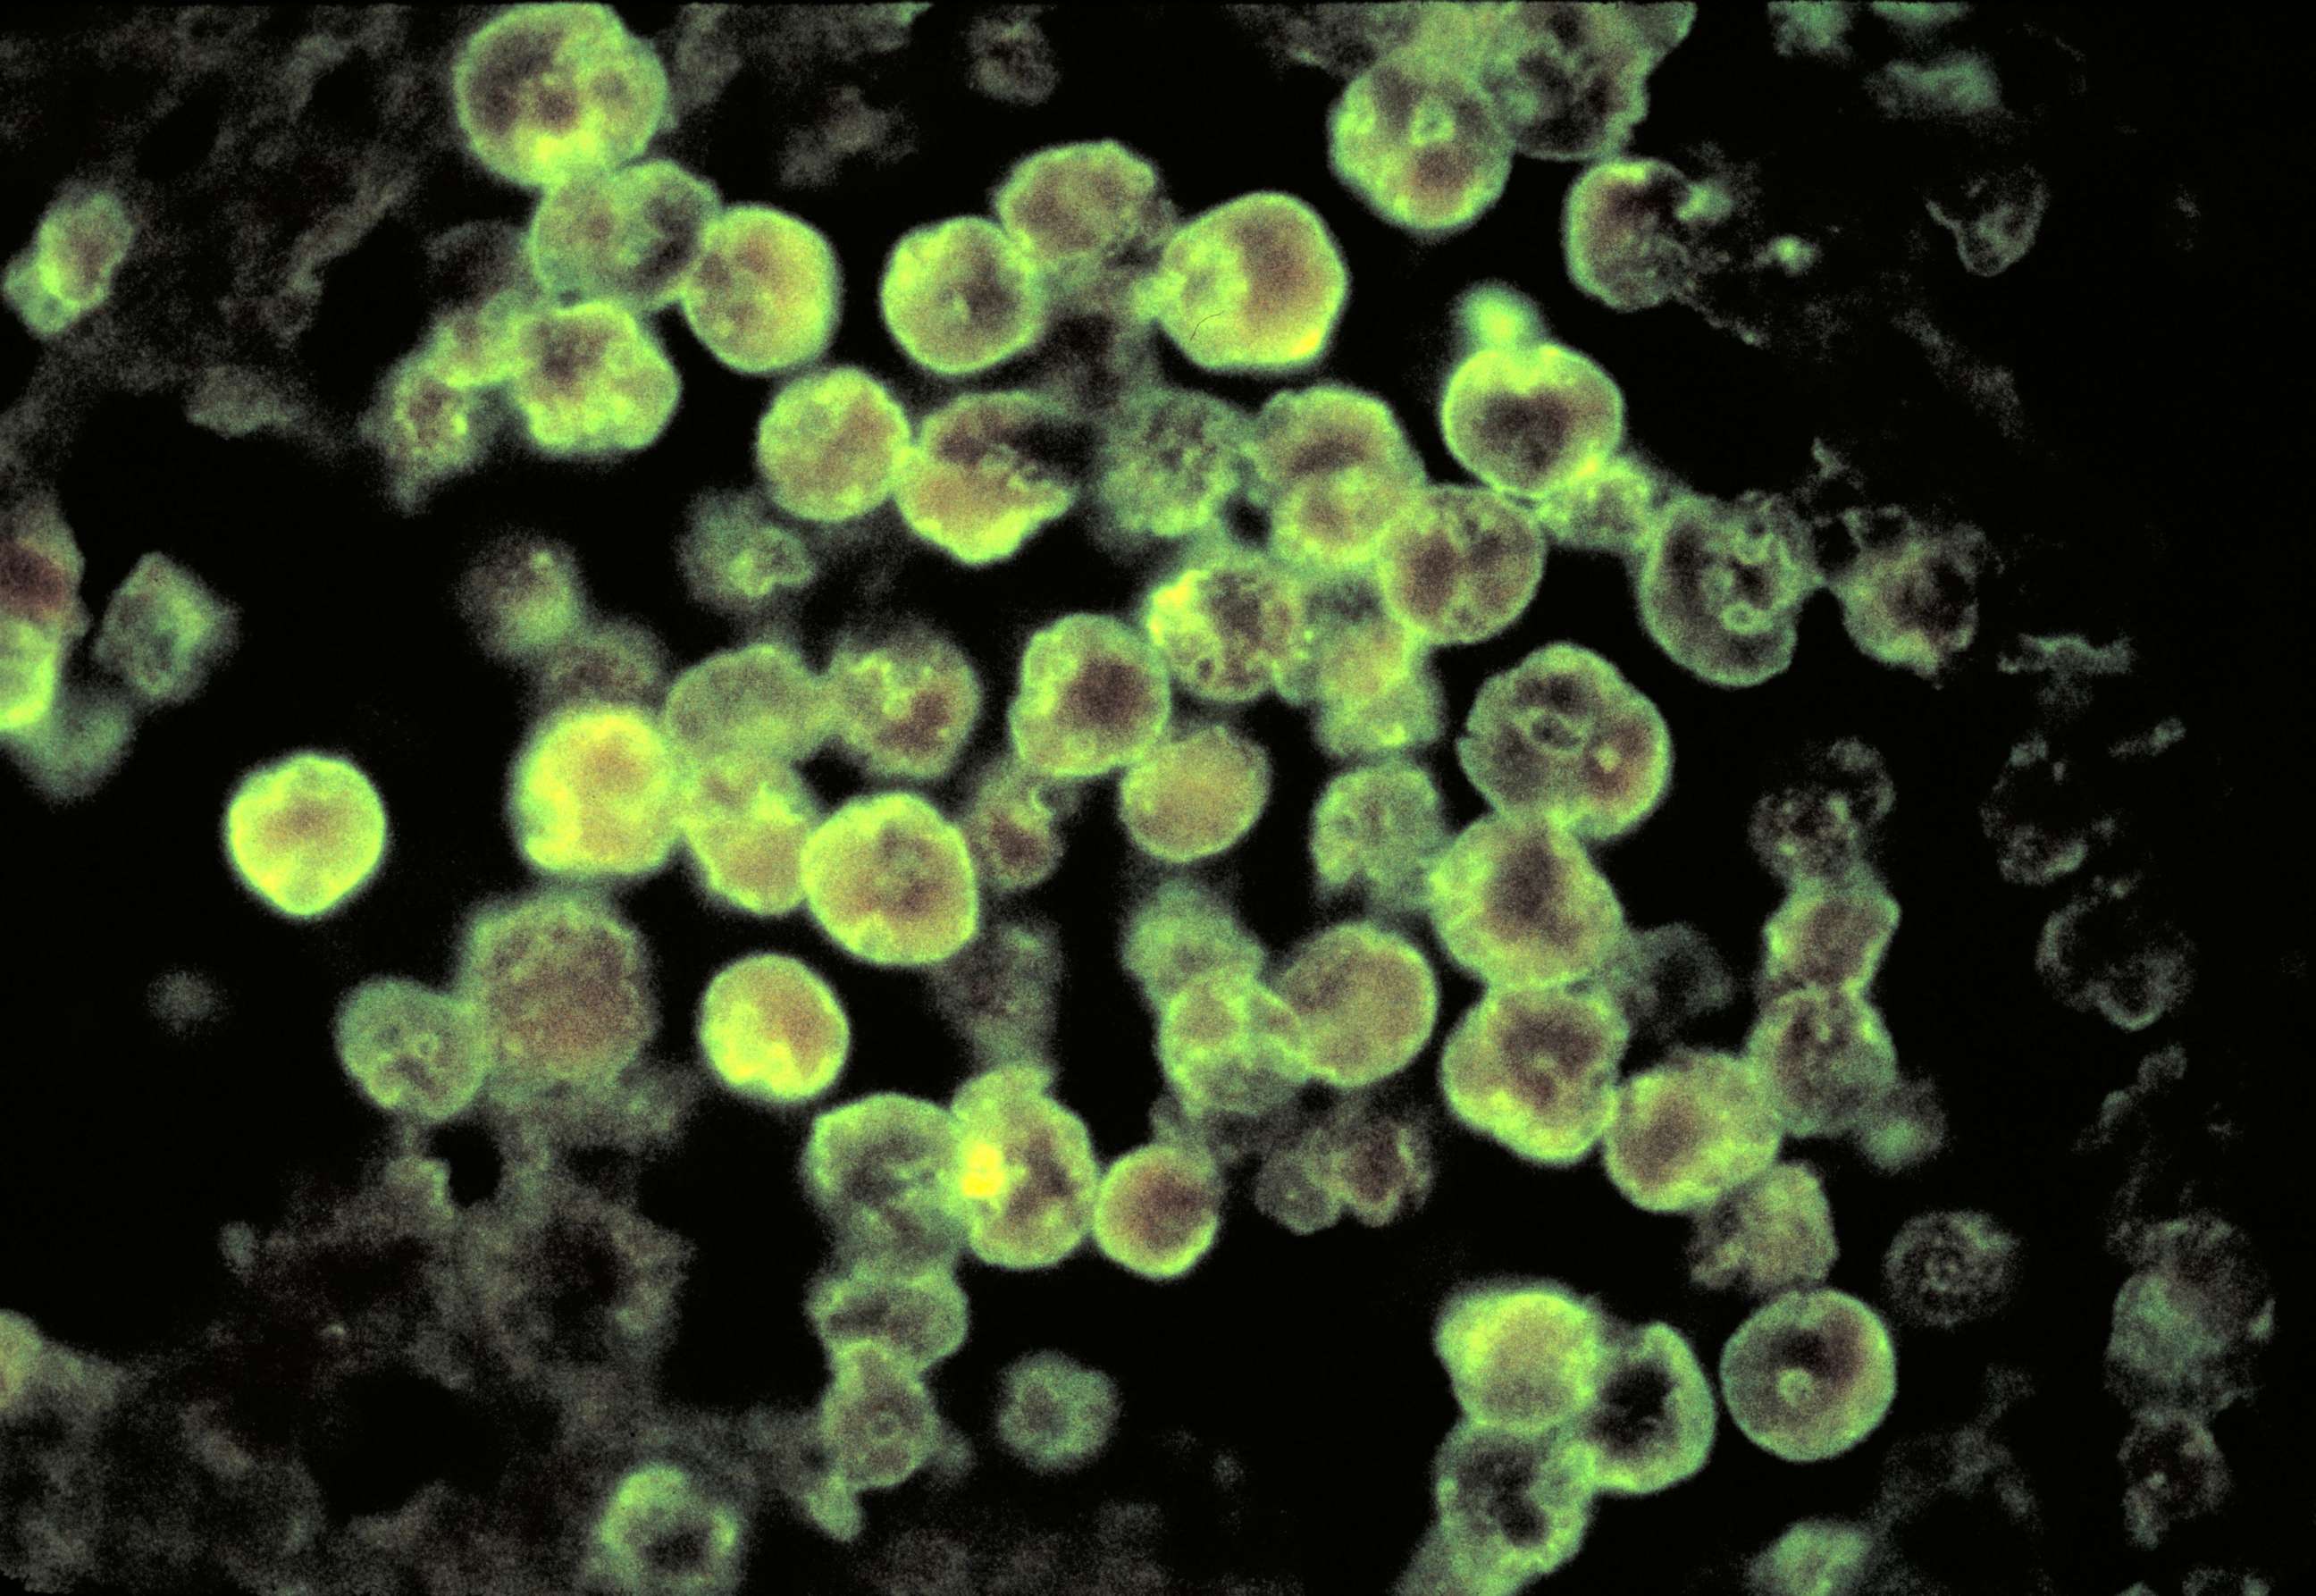 PHOTO: Using the direct fluorescent antibody (DFA) staining technique, this photomicrograph depicts the histopathologic characteristics associated with a case of amebic meningoencephalitis due to Naegleria fowleri parasites.